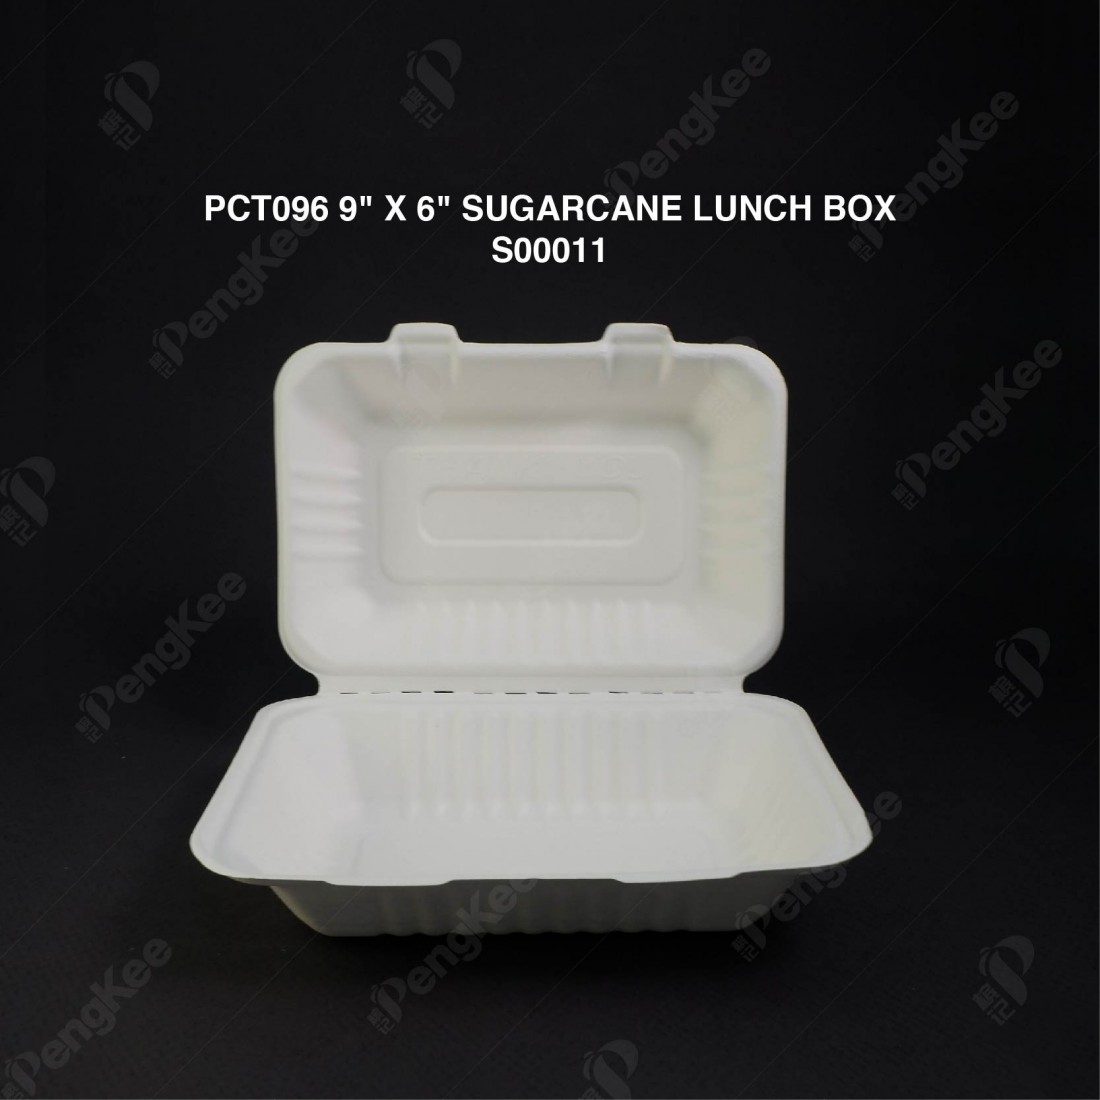 PCT096 9" X 6" SUGARCANE LUNCH BOX